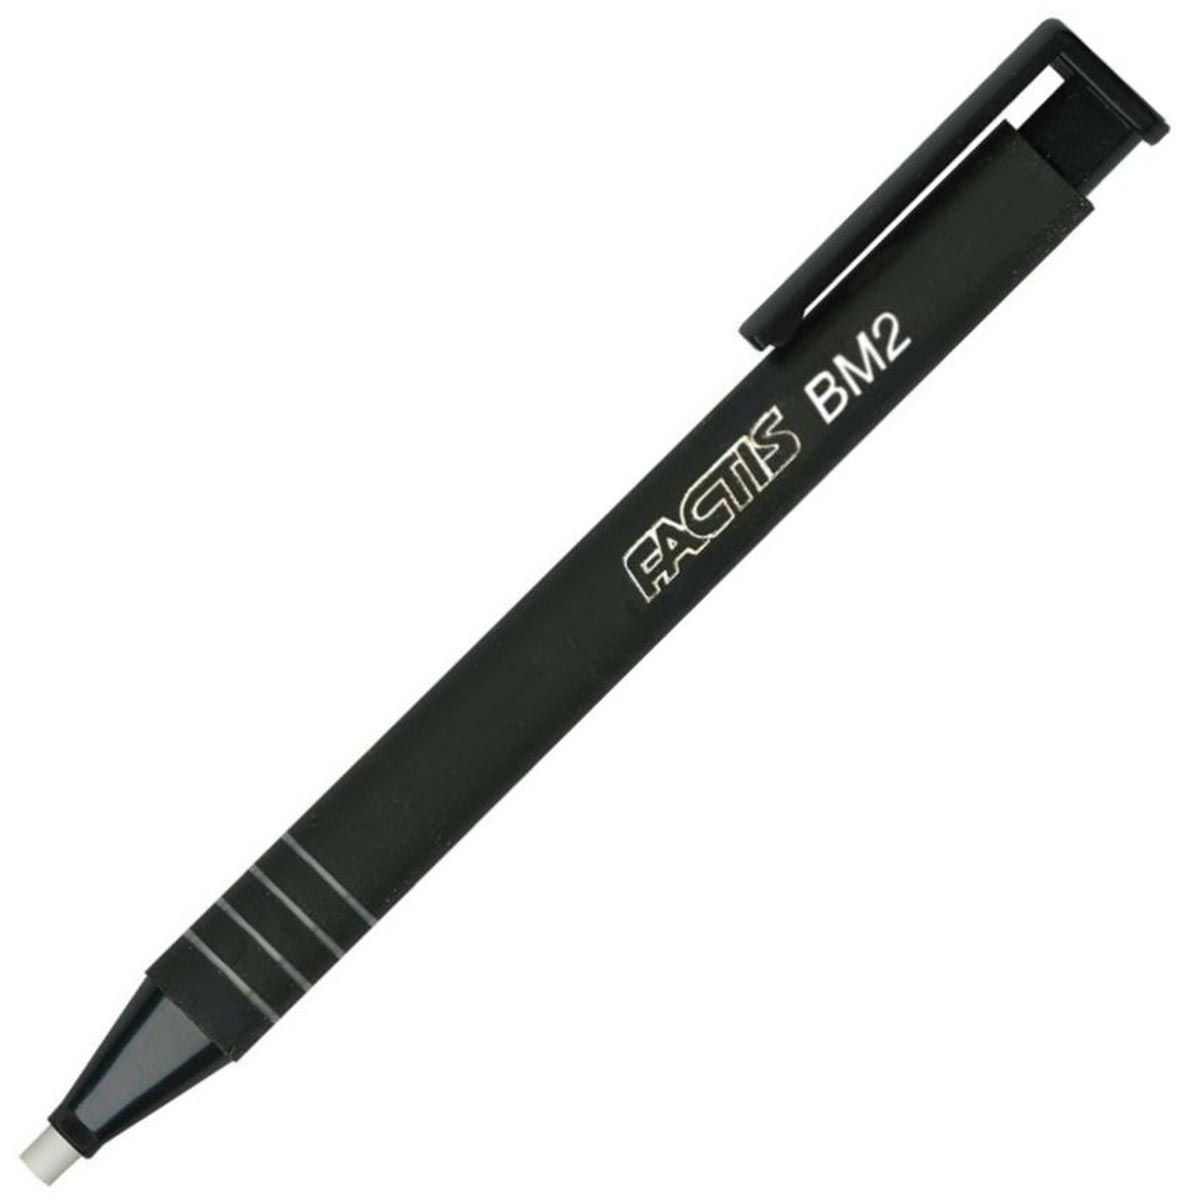 General's Pencil Factis Pen Style BM-2 Mechanical Eraser